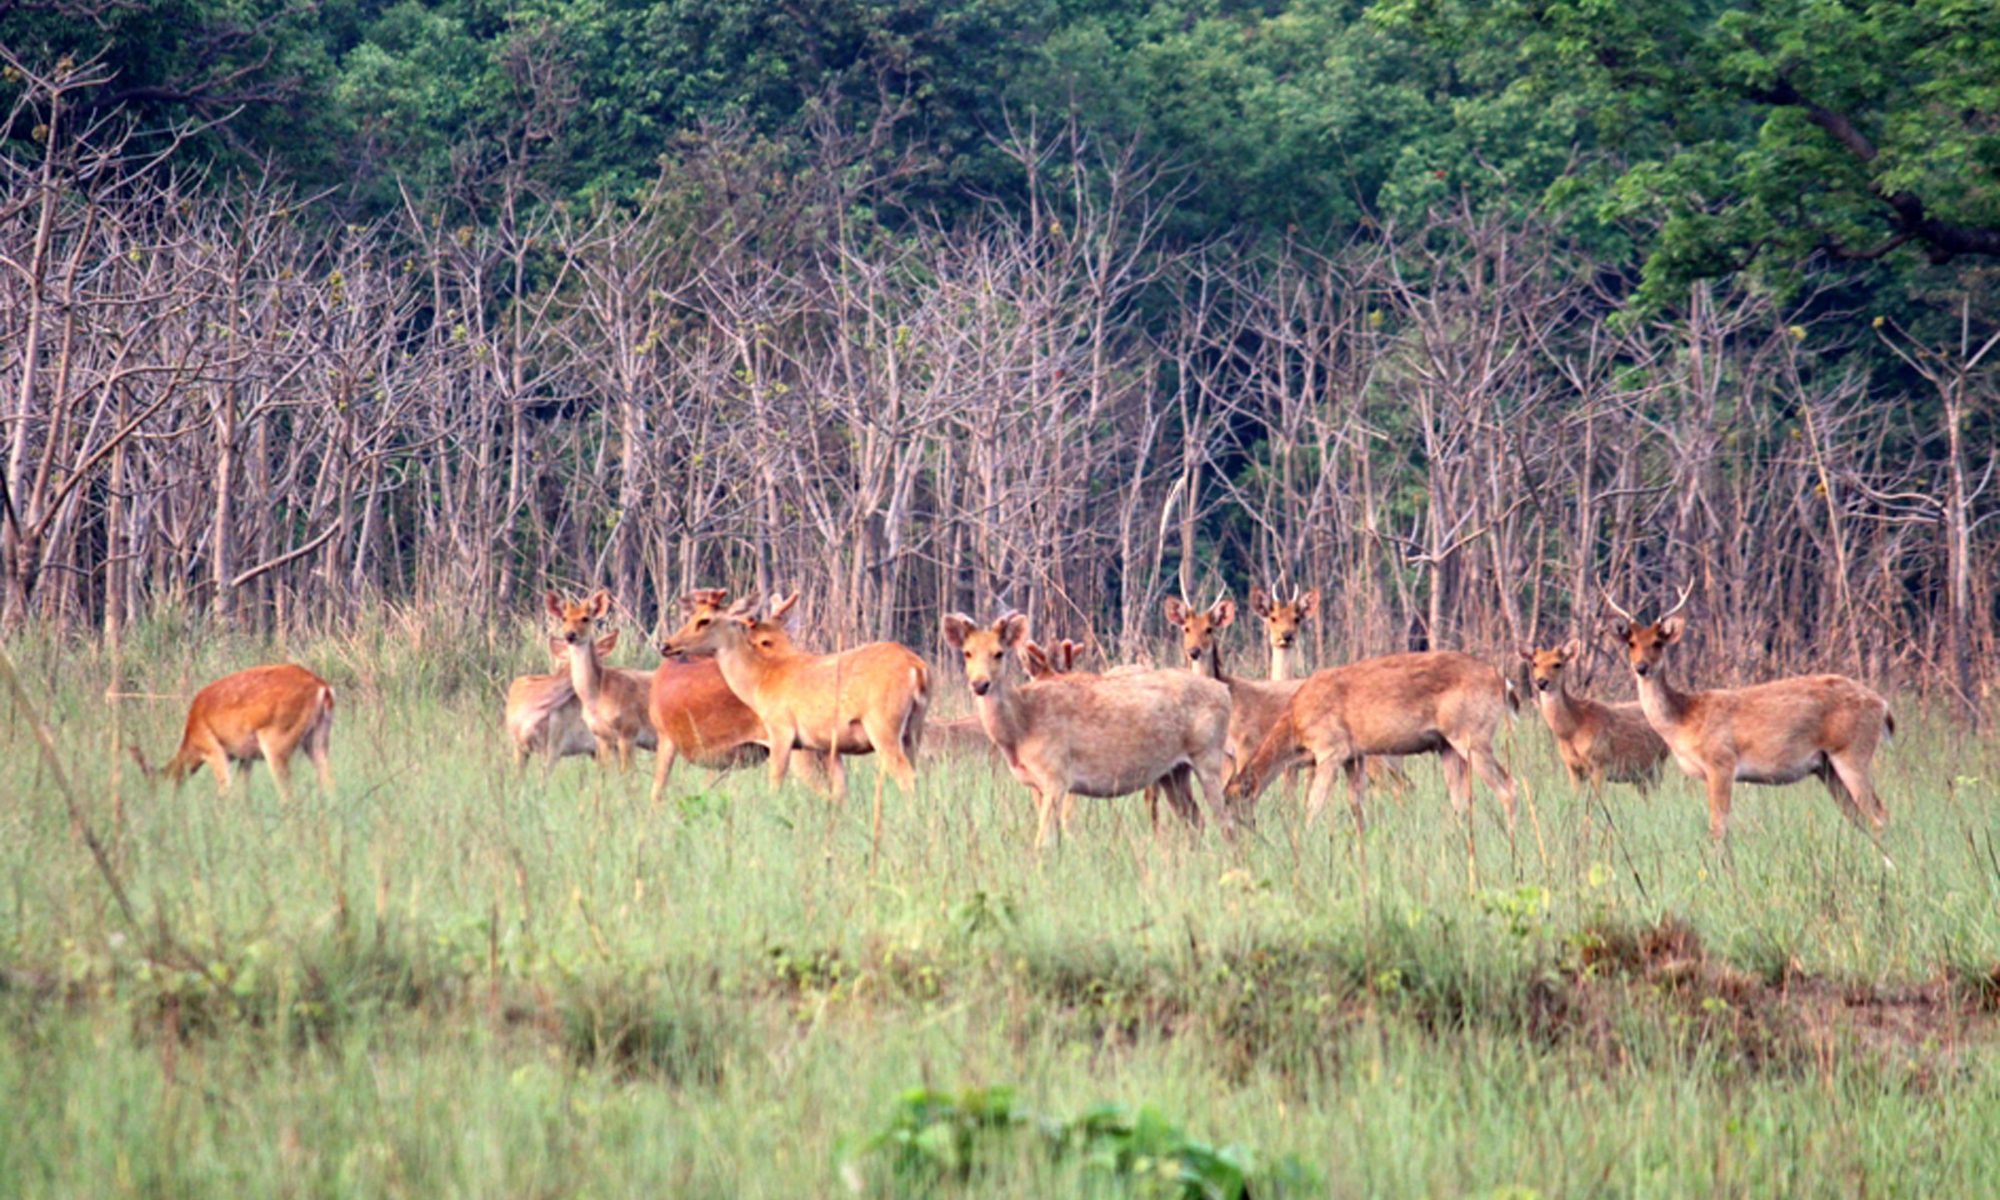 Shuklaphanta swamp deer being monitored